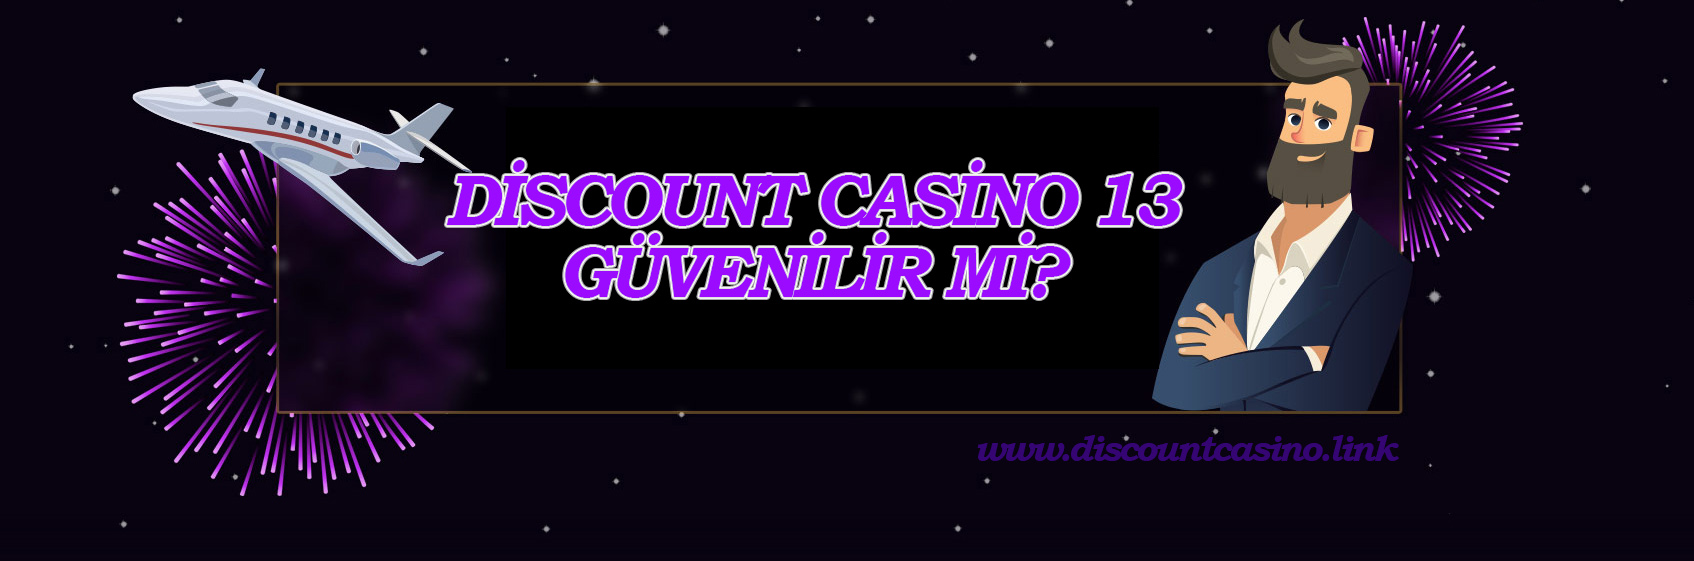 Discount Casino 13 Güvenilir mi?